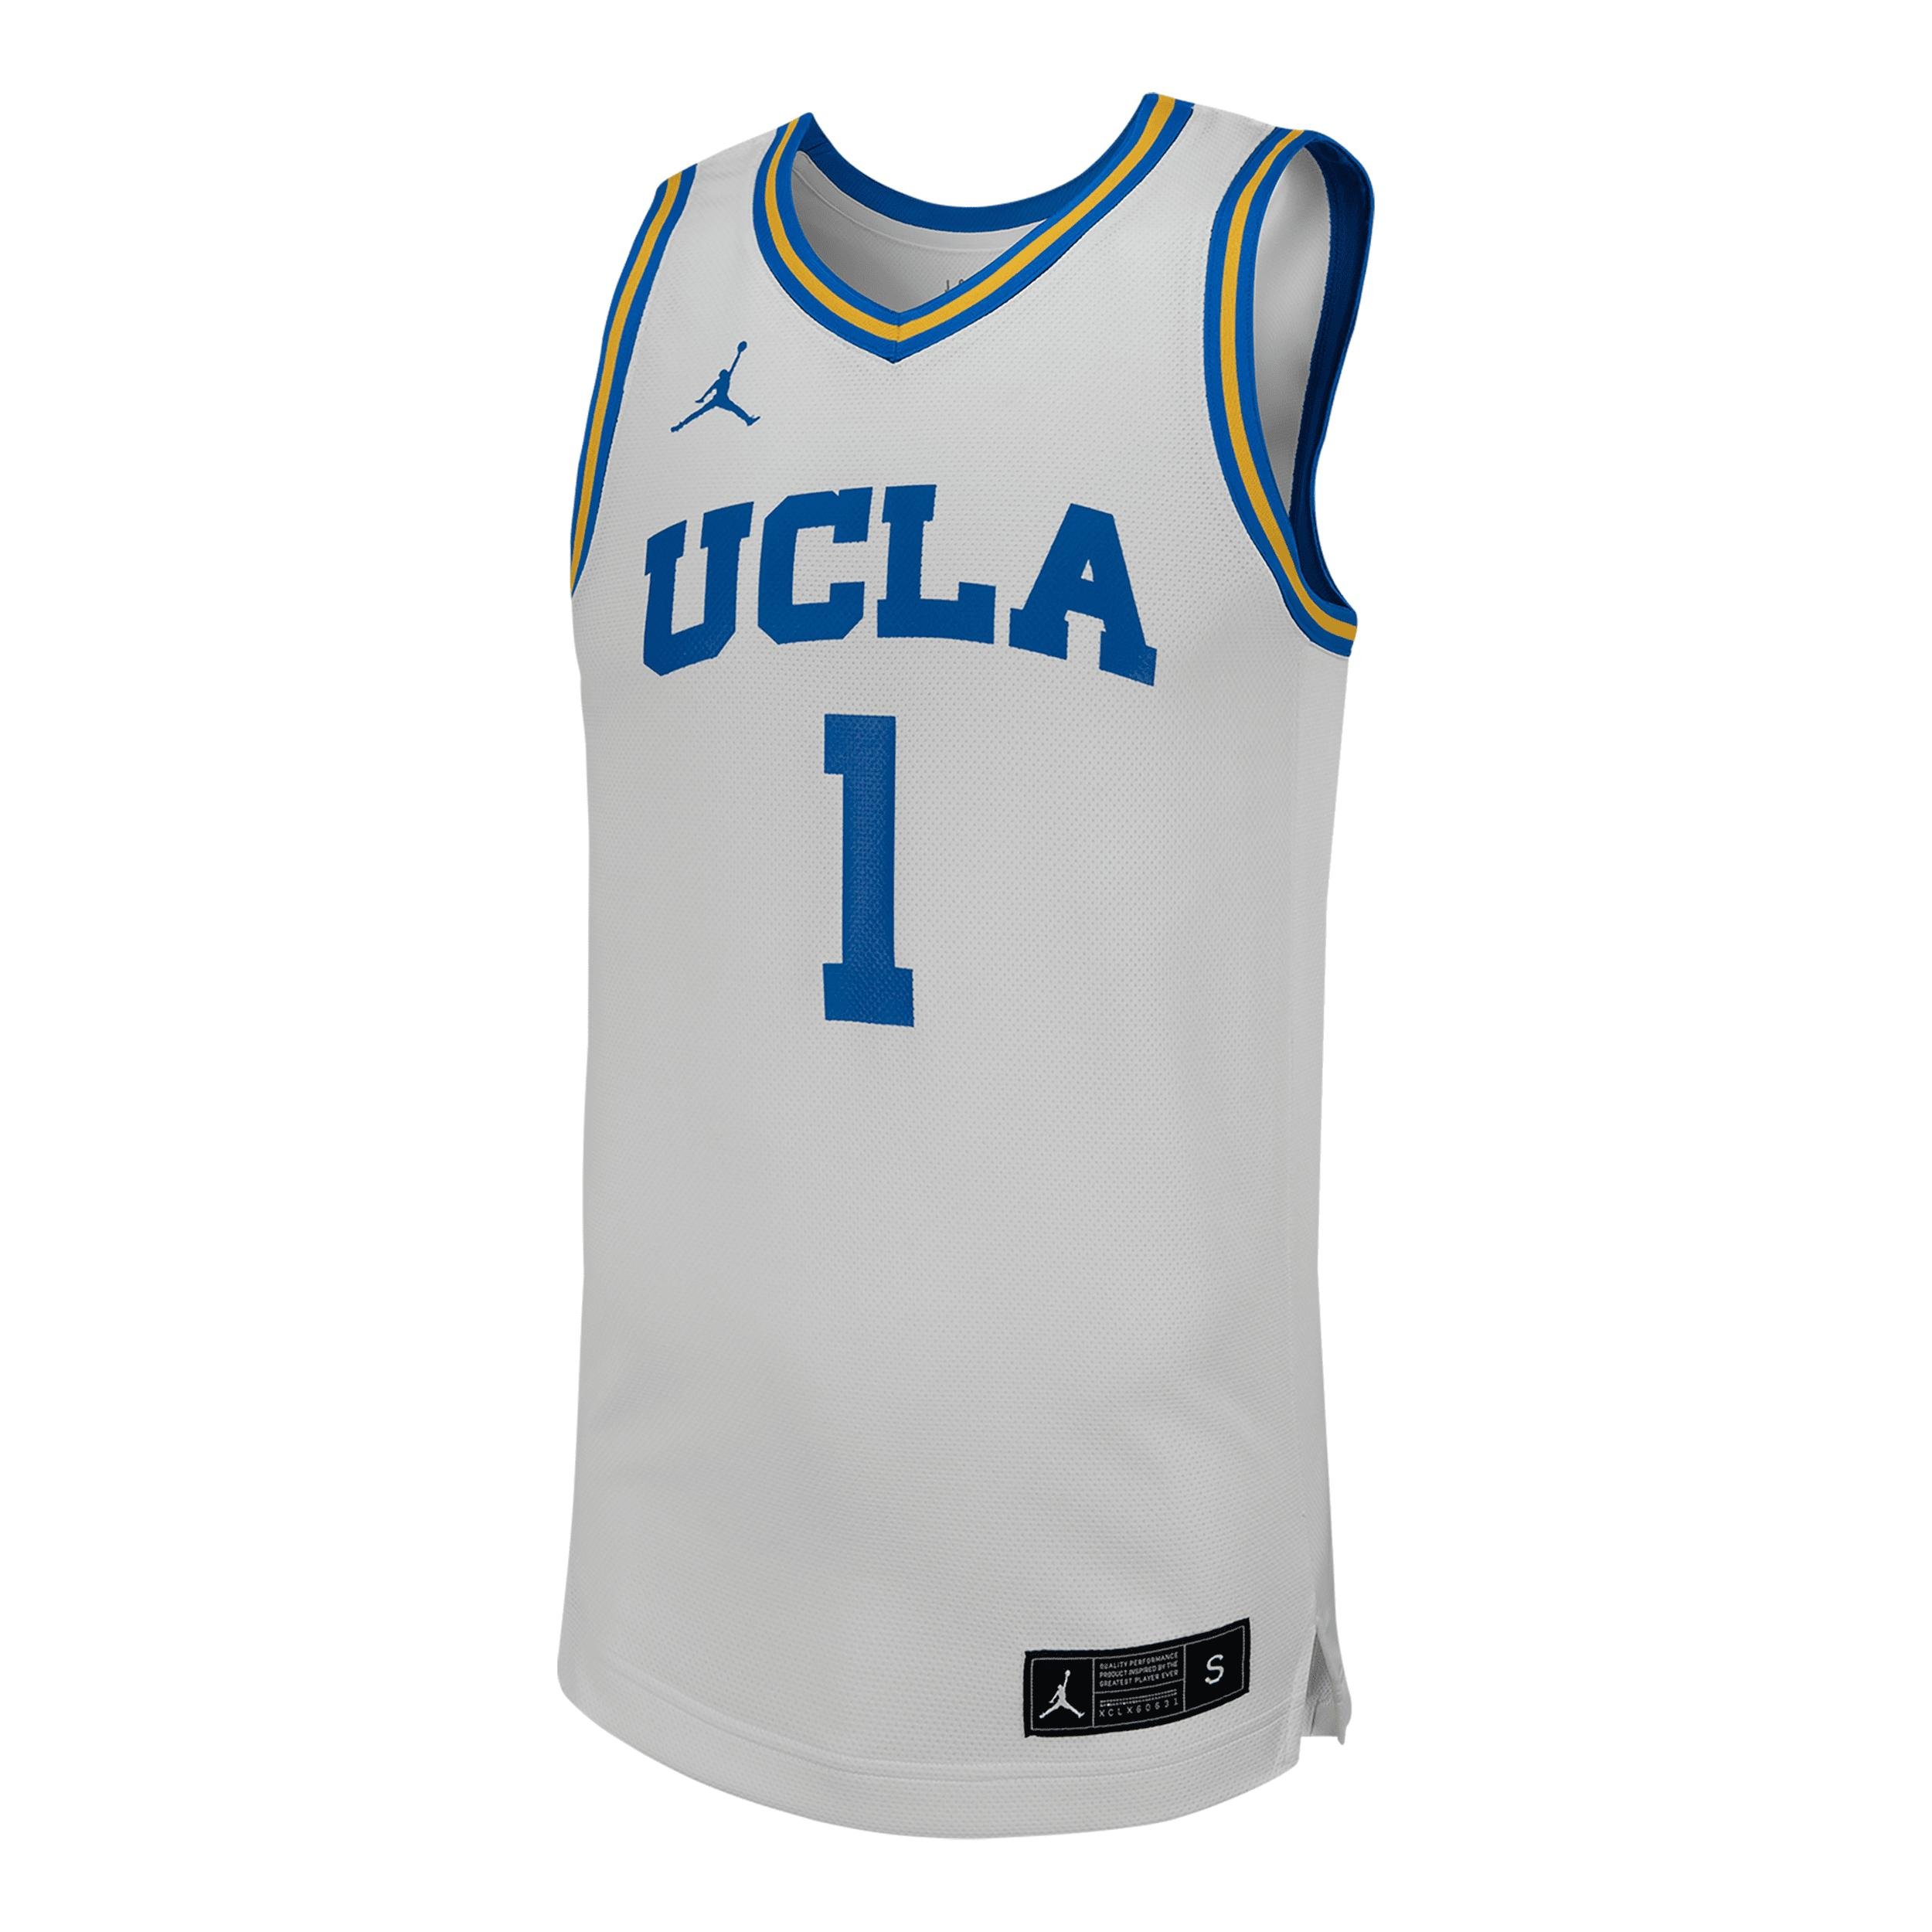 Kiki Rice UCLA Jordan College Basketball Replica Jersey by JORDAN